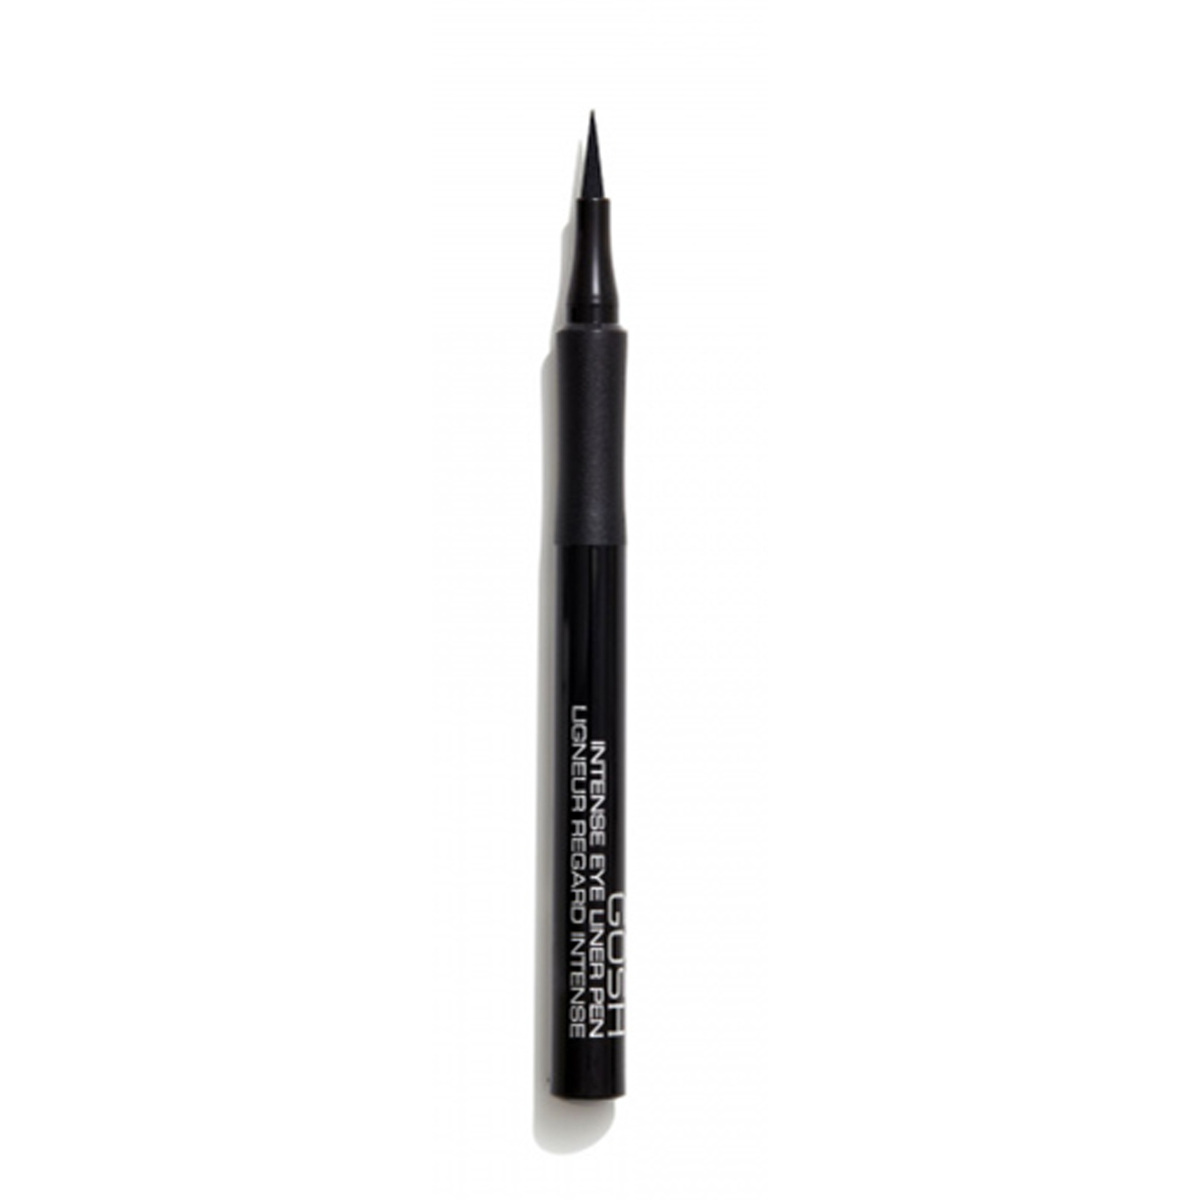 Gosh Intense Eye Liner Pen Black 01 1 ml